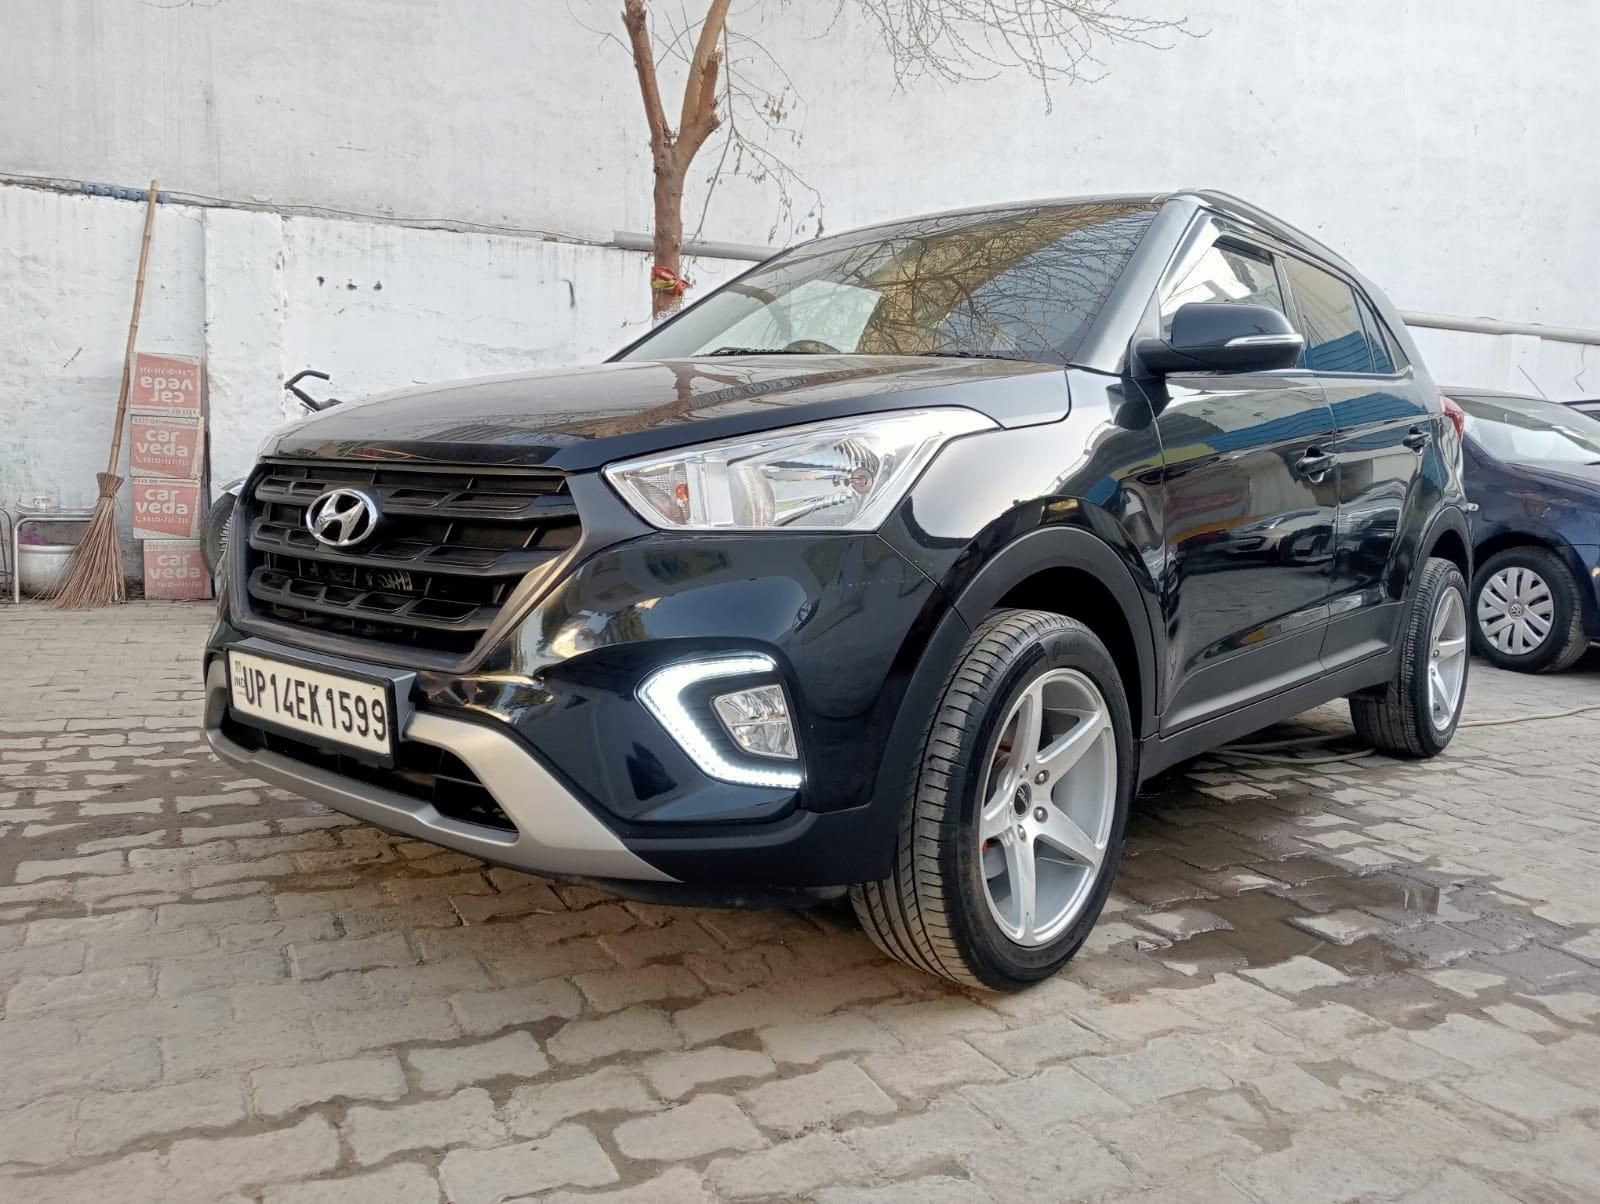 Used Hyundai Creta 1.4 E+ Diesel 2020